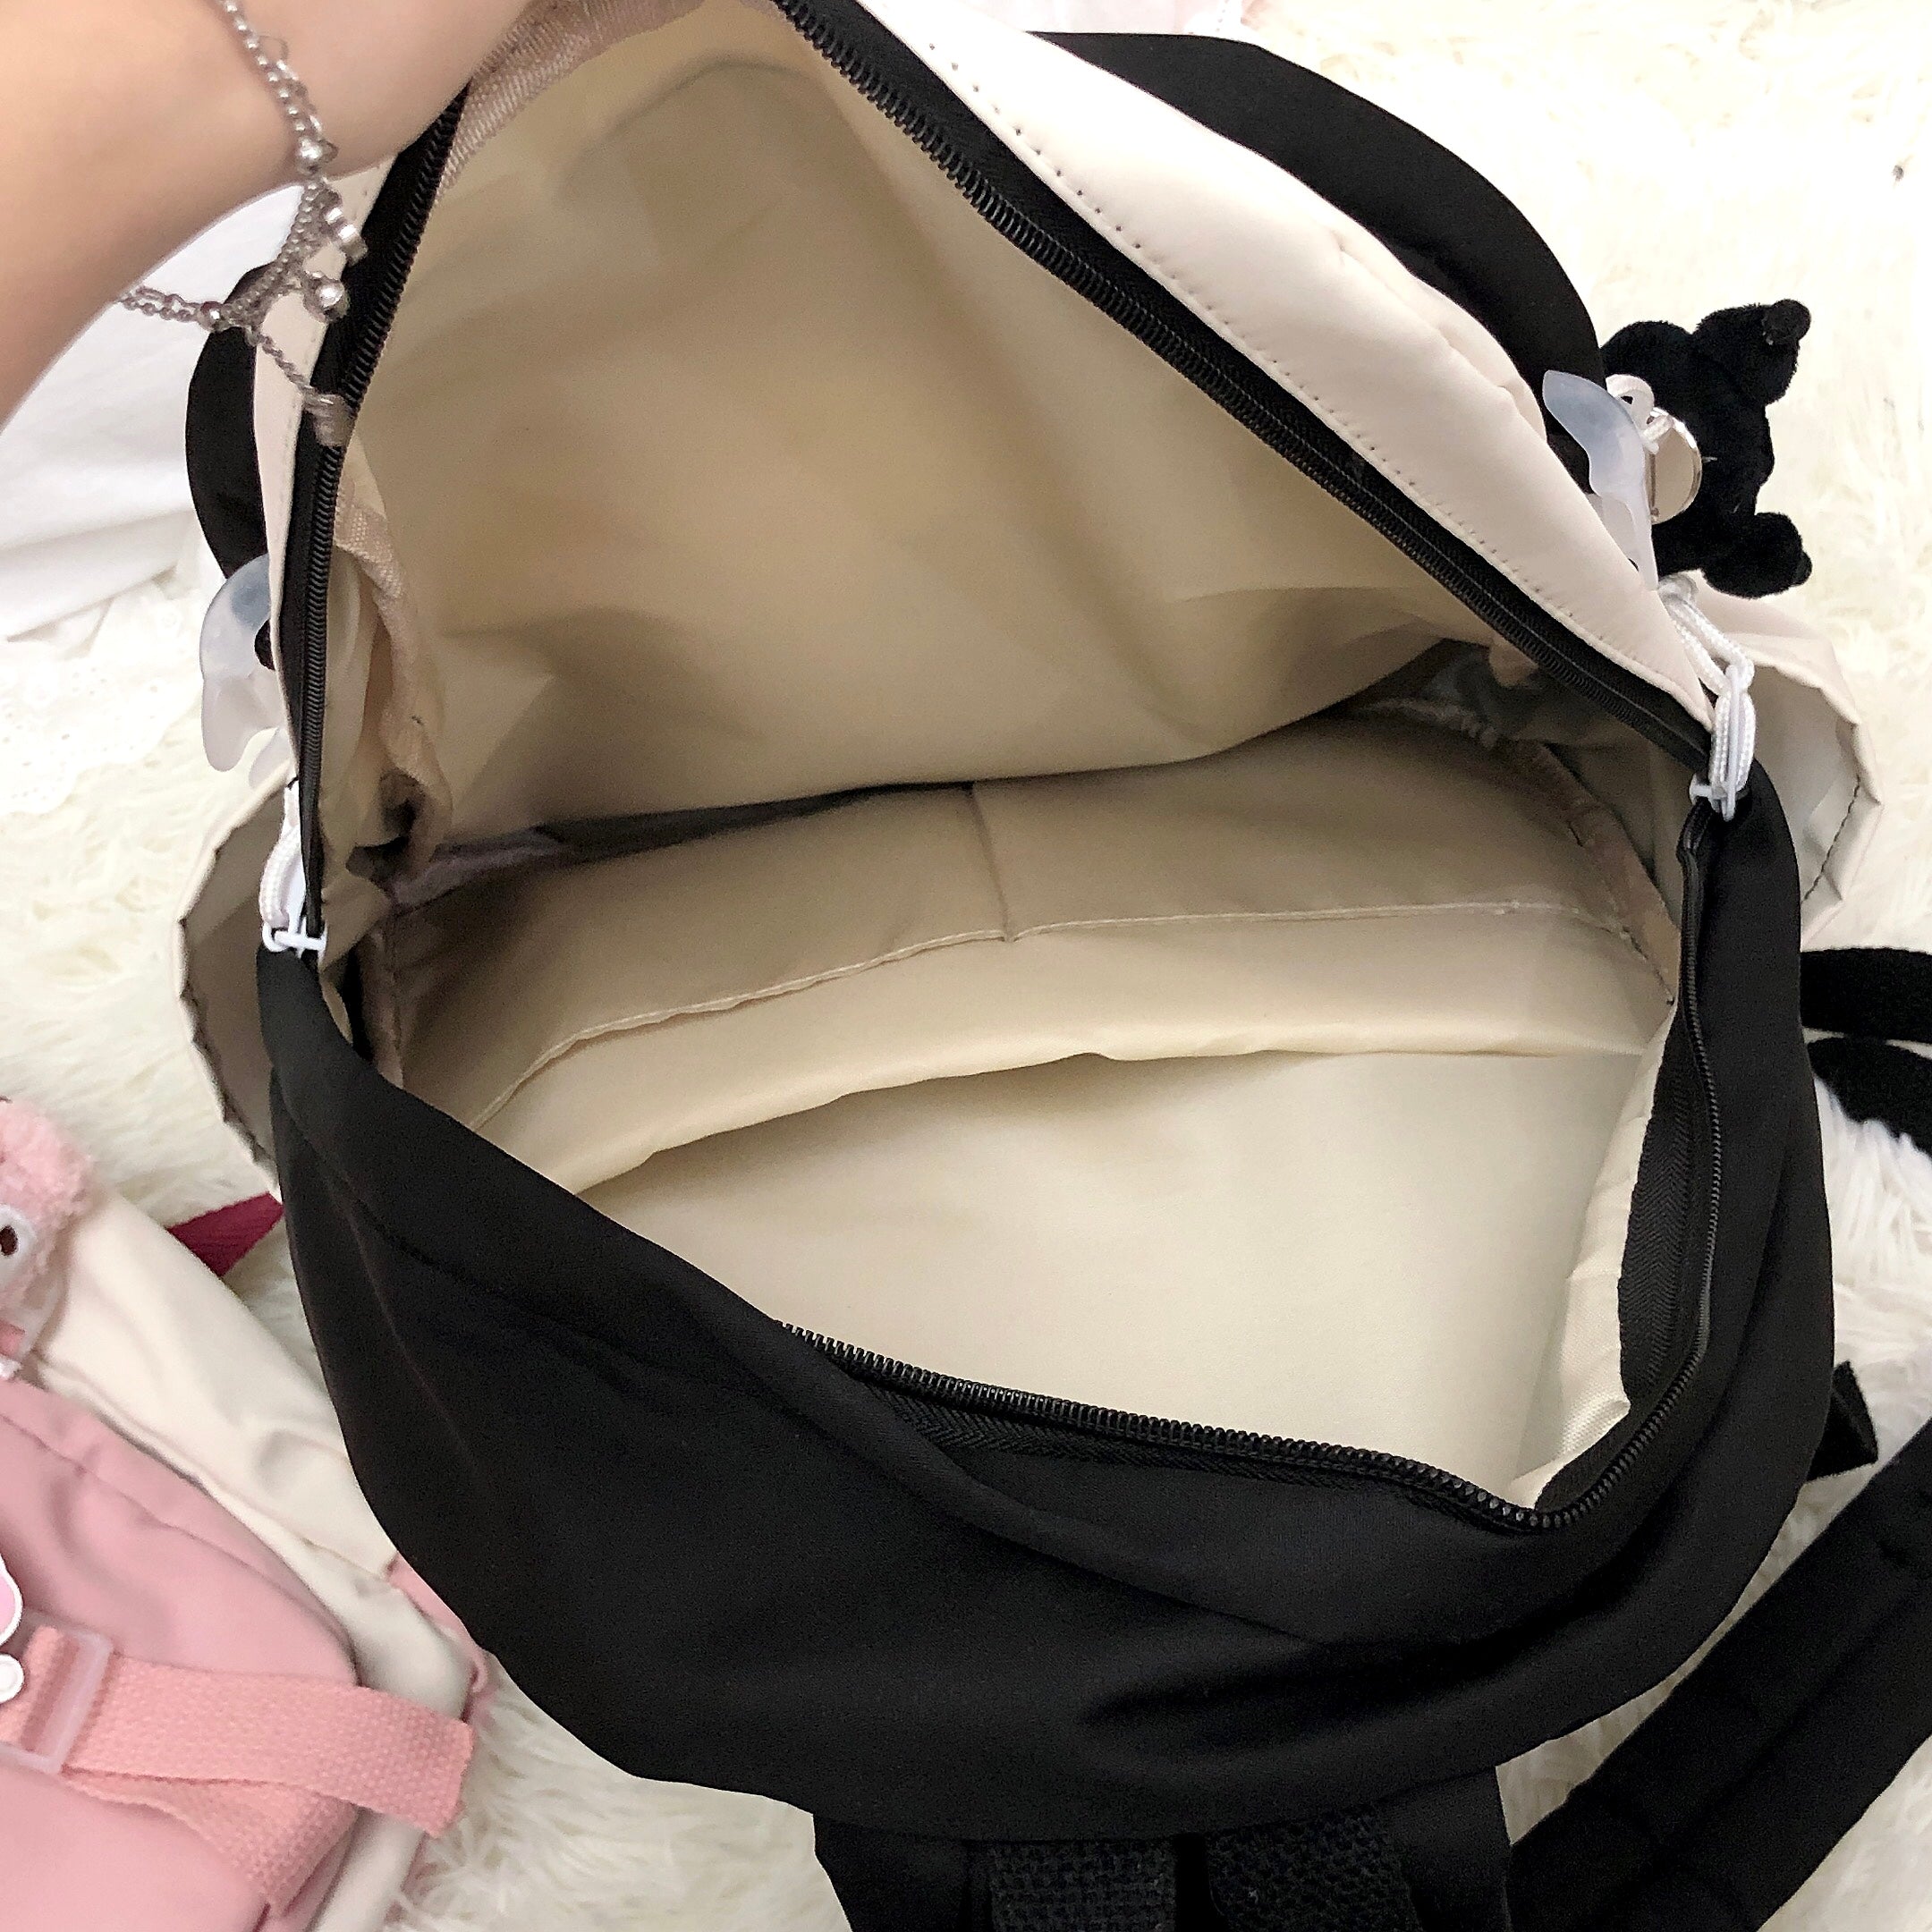 Kuromi Backpack